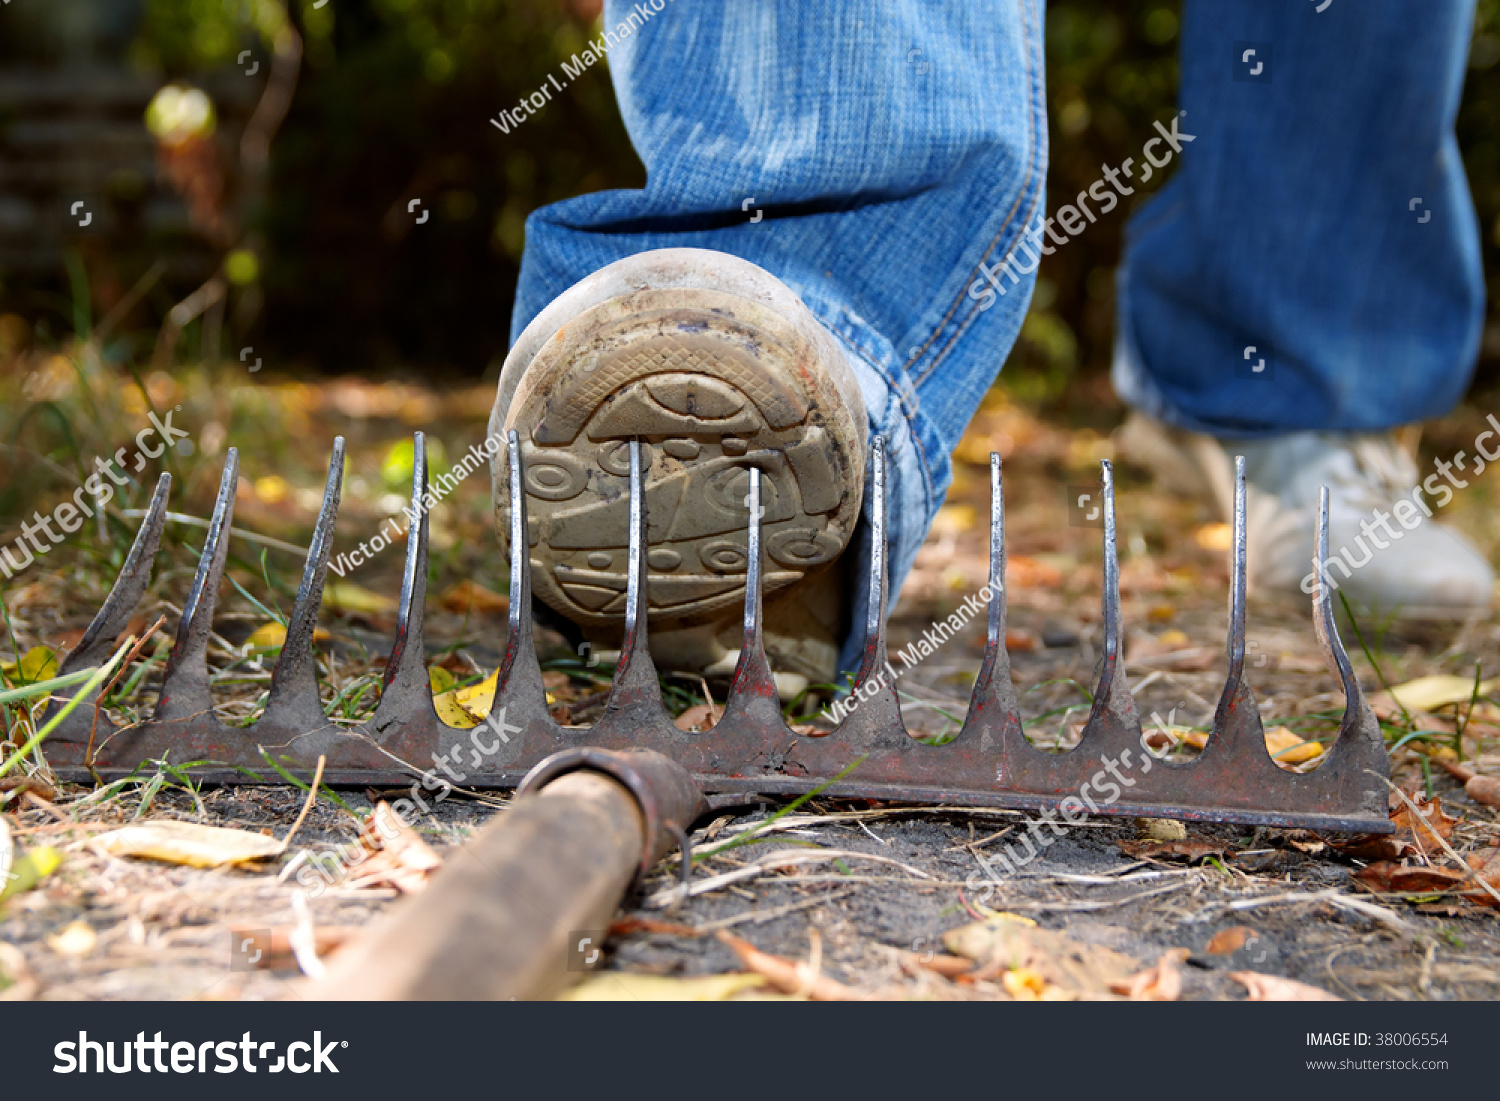 Stepping On Rakes Stock Photo 38006554 | Shutterstock